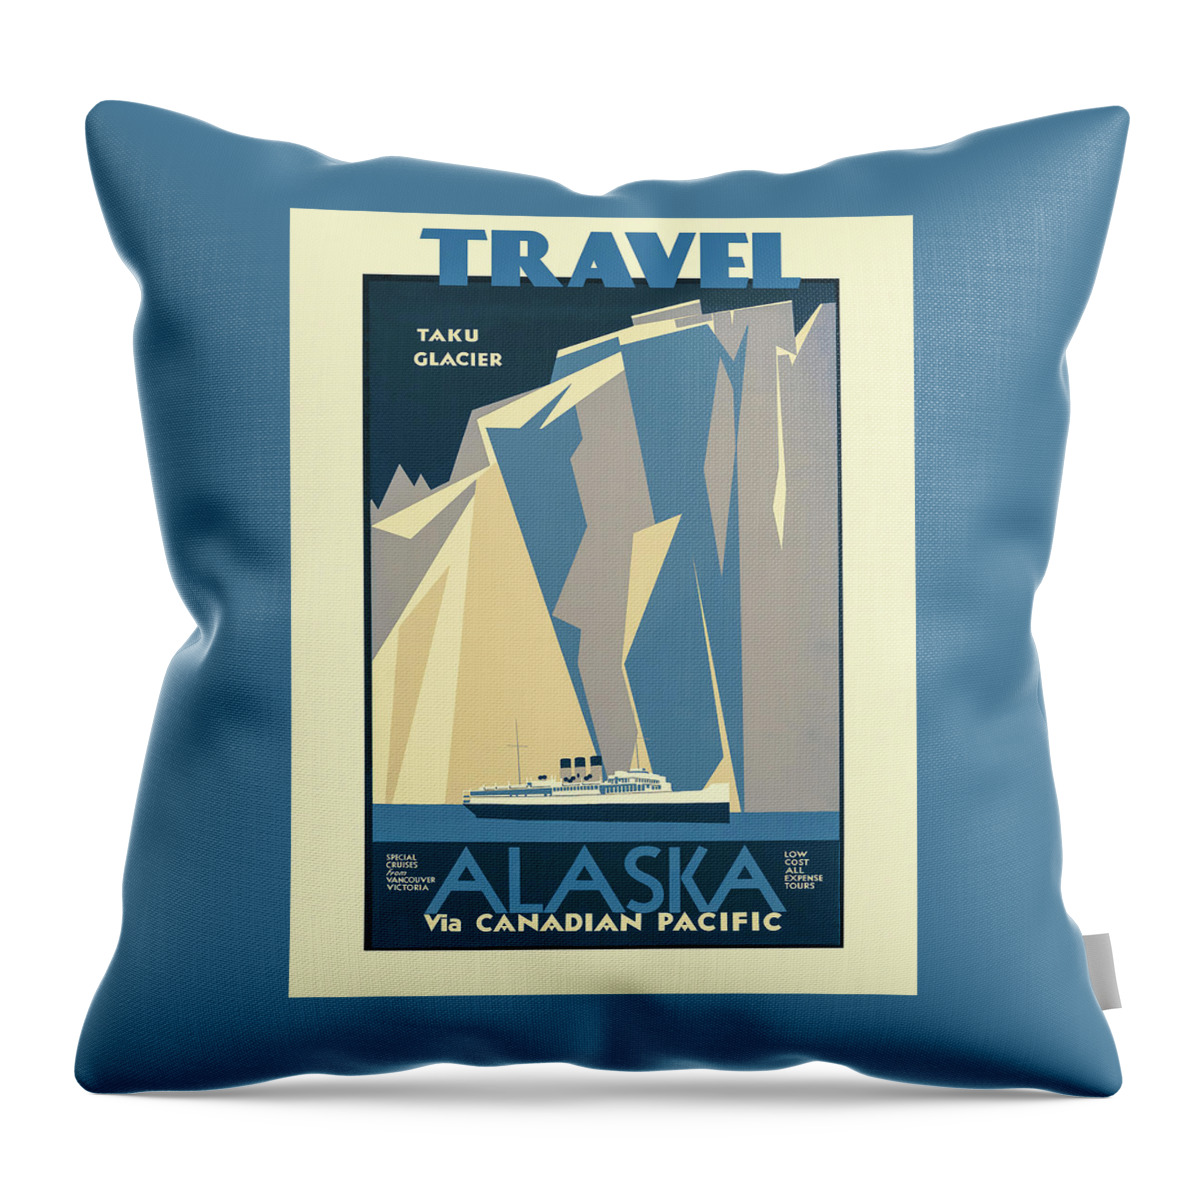 Alaska Throw Pillow featuring the photograph Cruise Alaska Vintage Travel Poster by Carol Japp